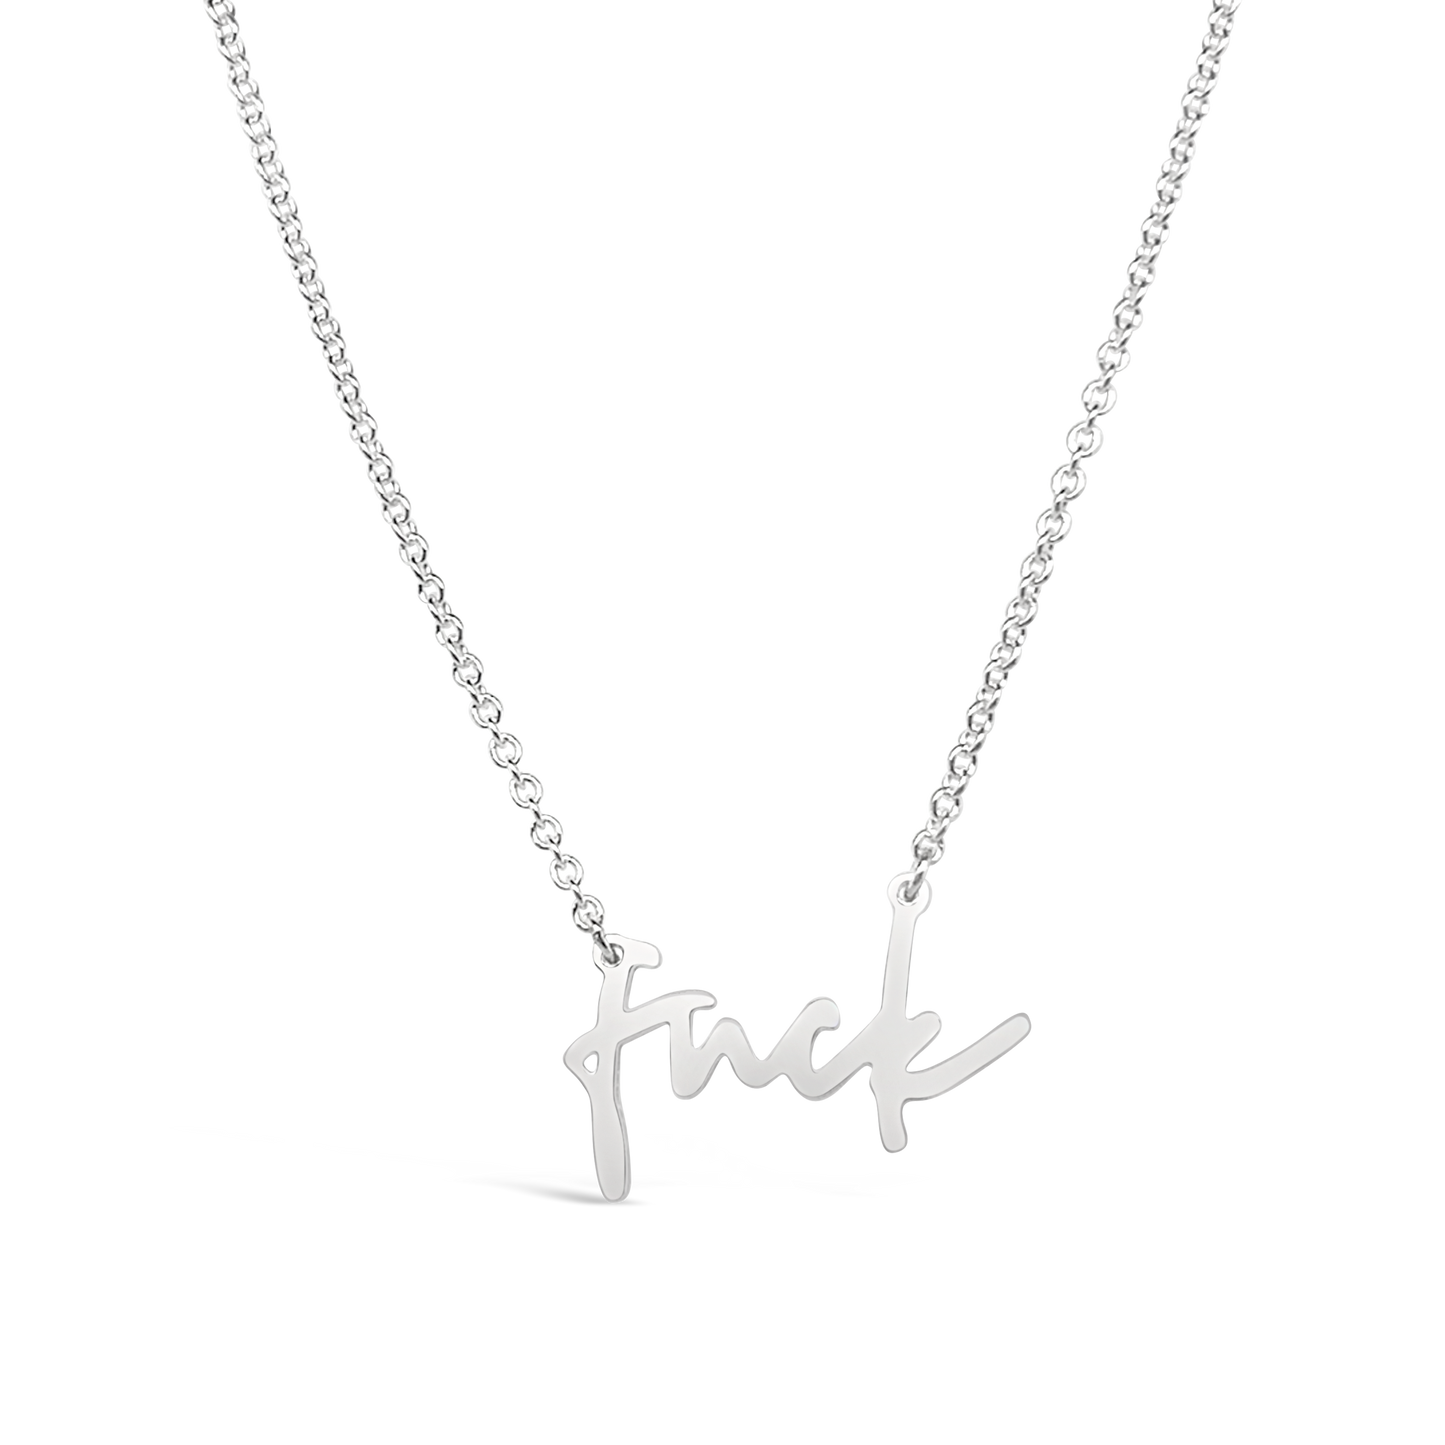 Fuck Necklace - Silver